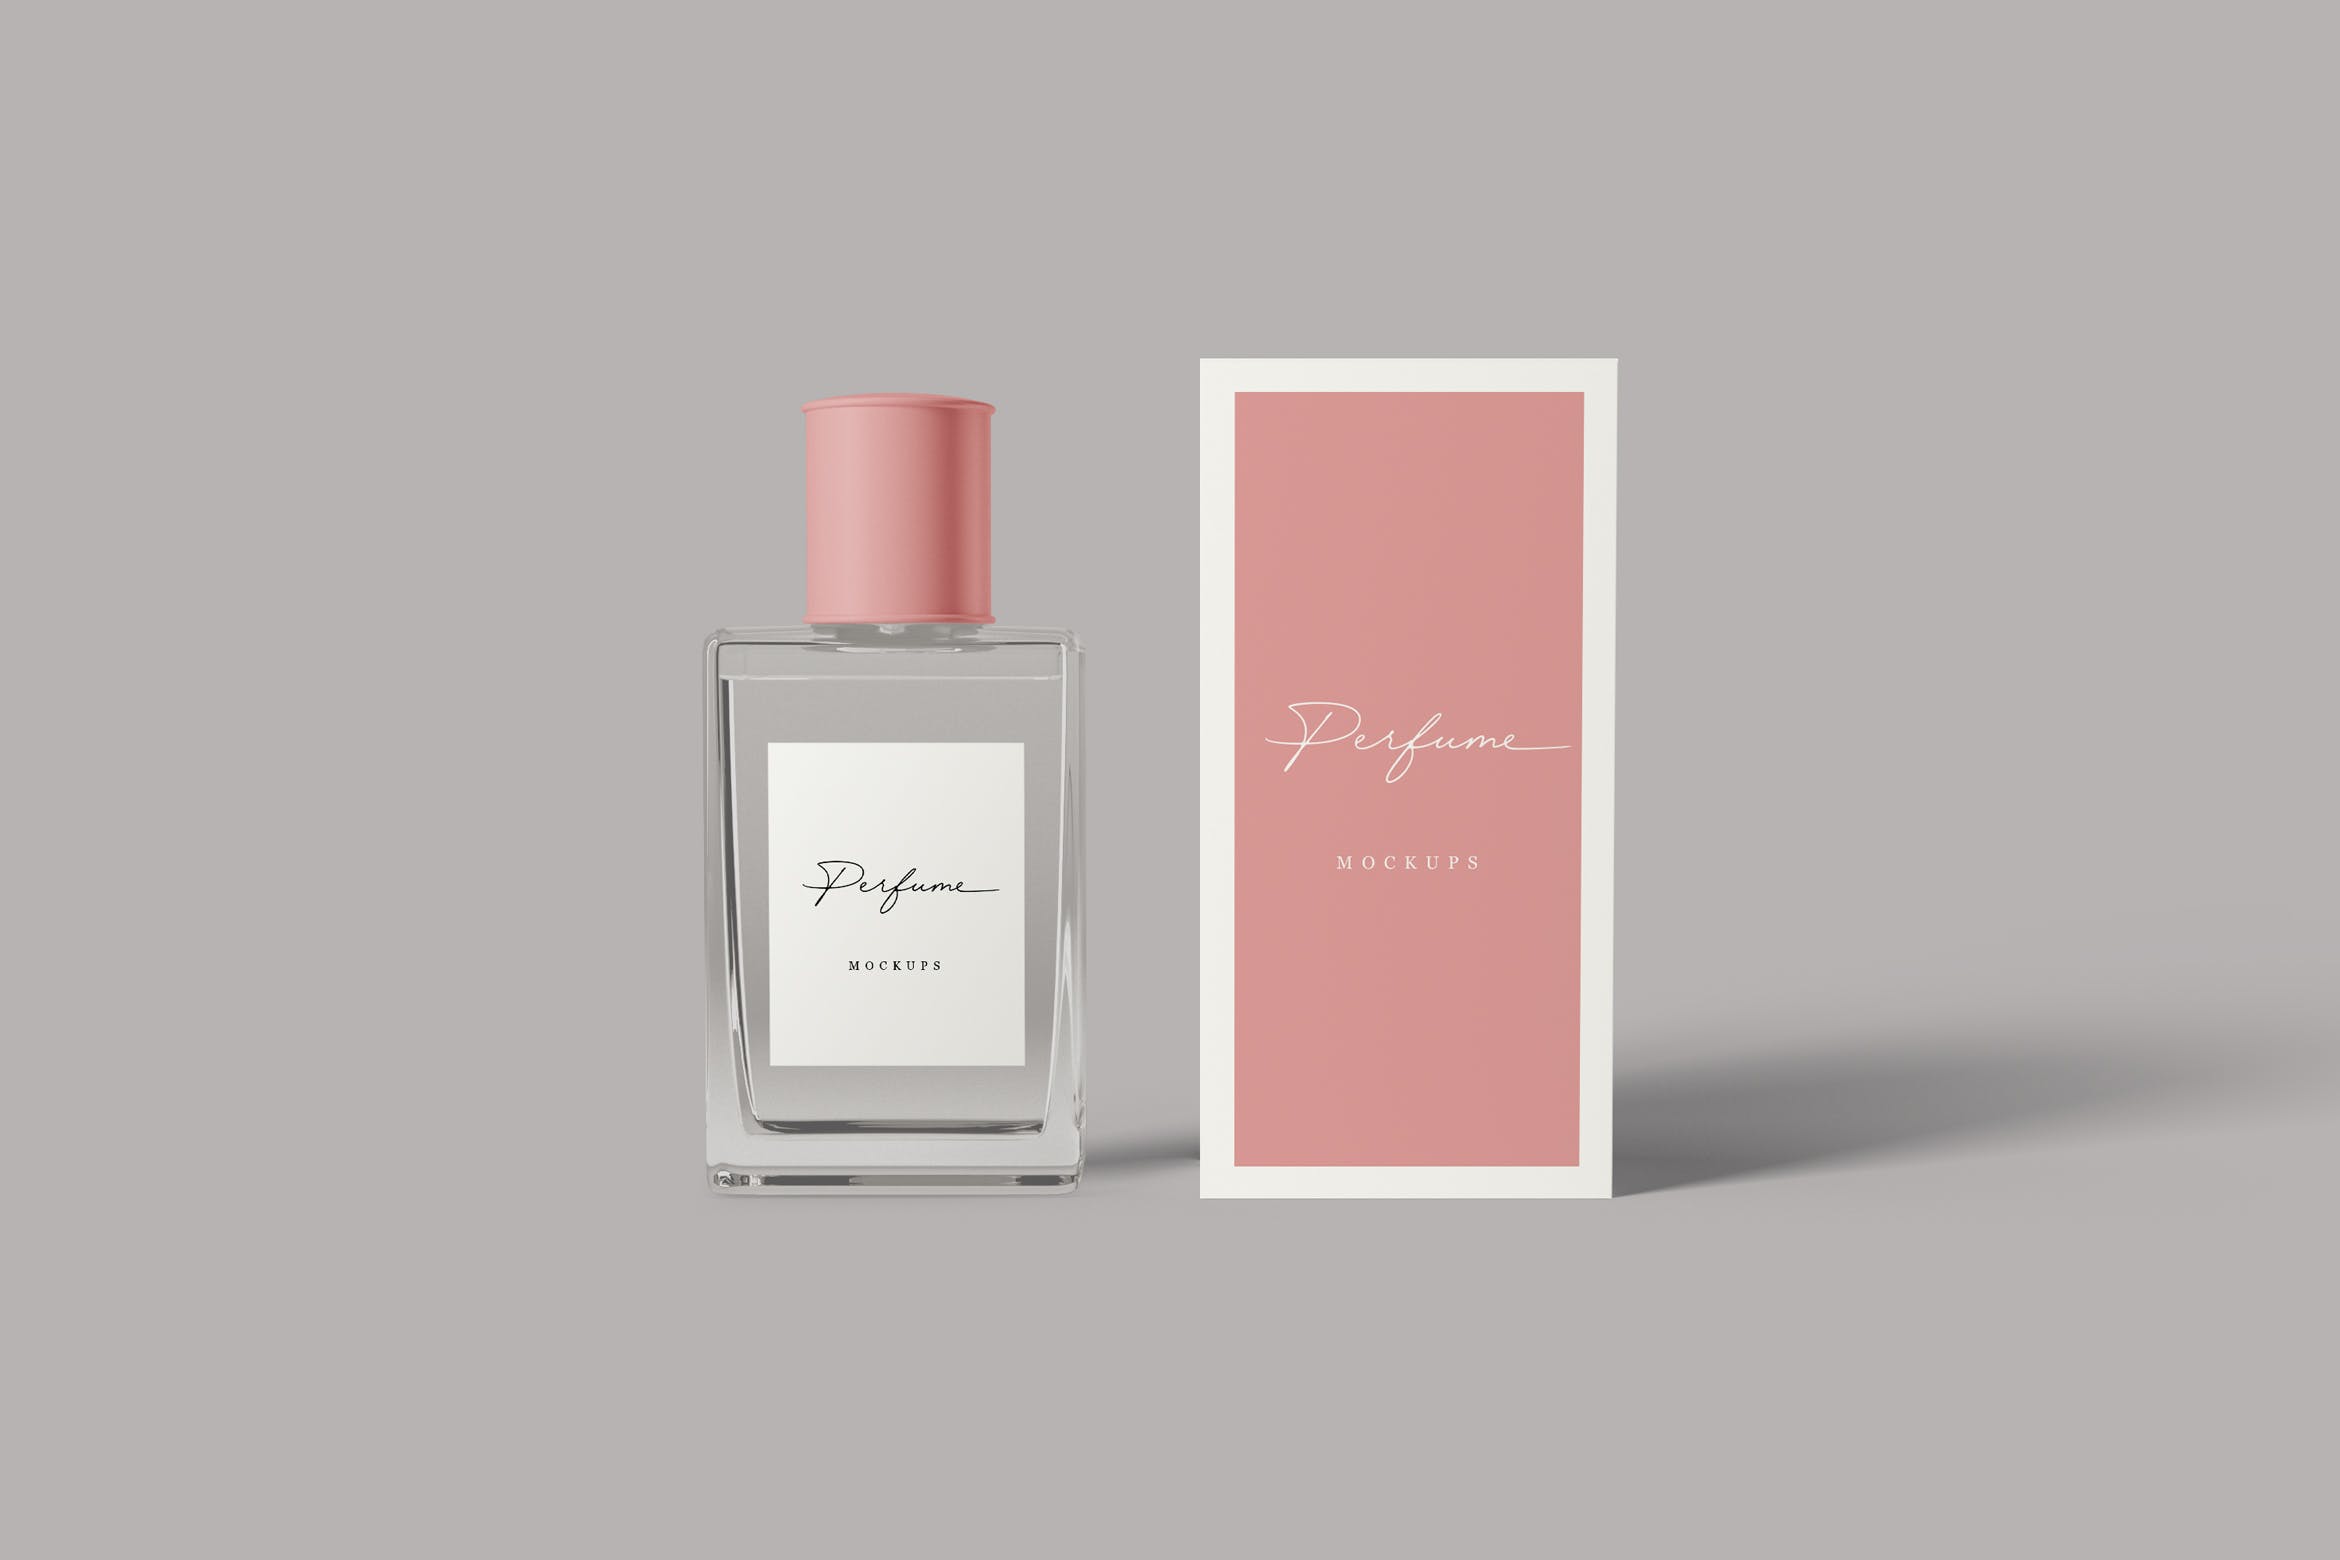 香水瓶外观设计图素材中国精选 Perfume Mockups插图